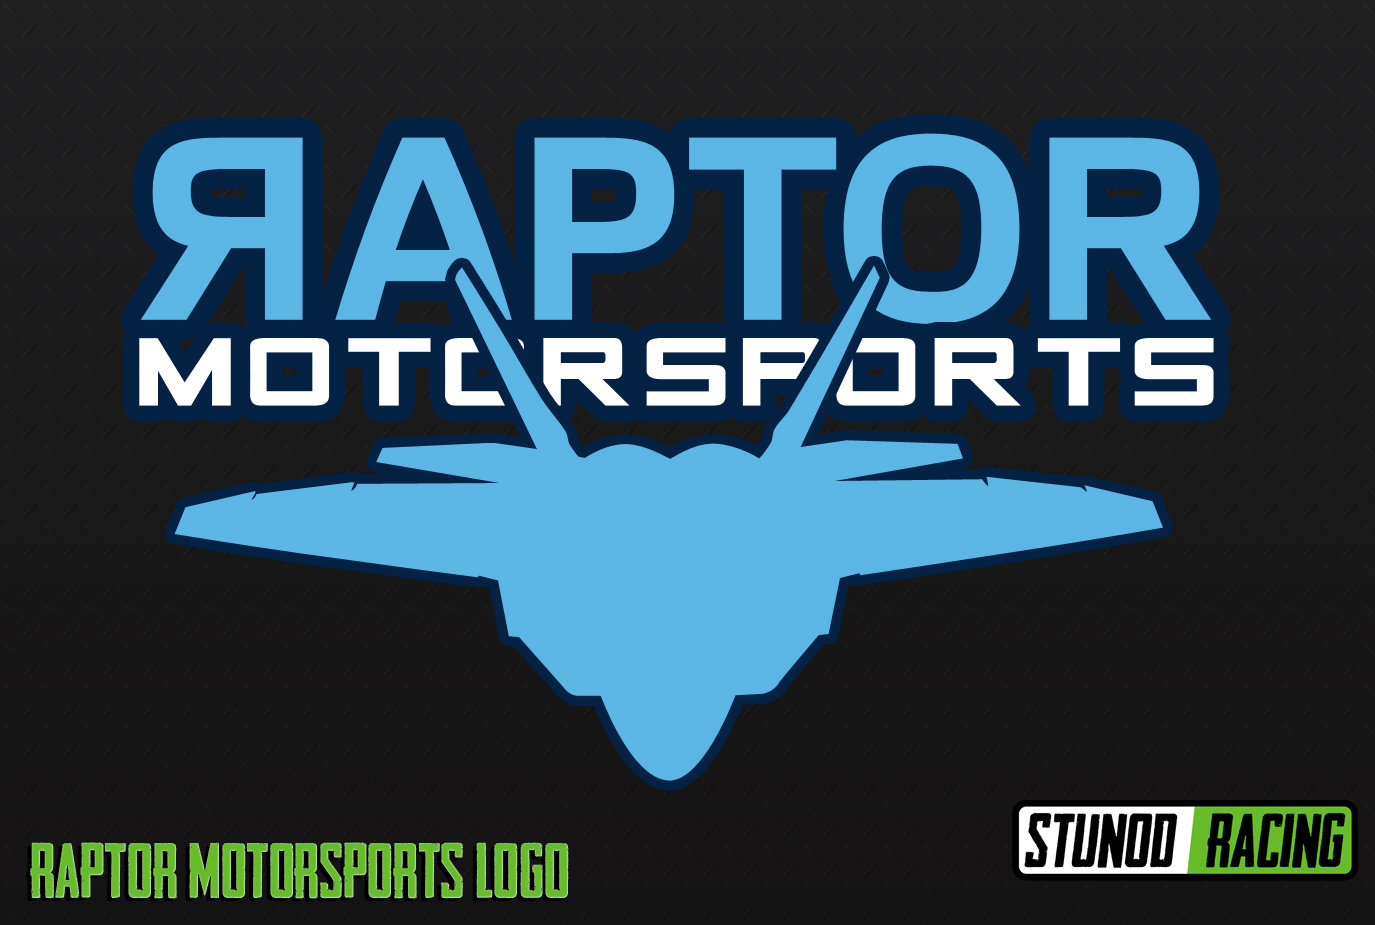 StunodRacing_RaptorMotorsports_Logo.jpg